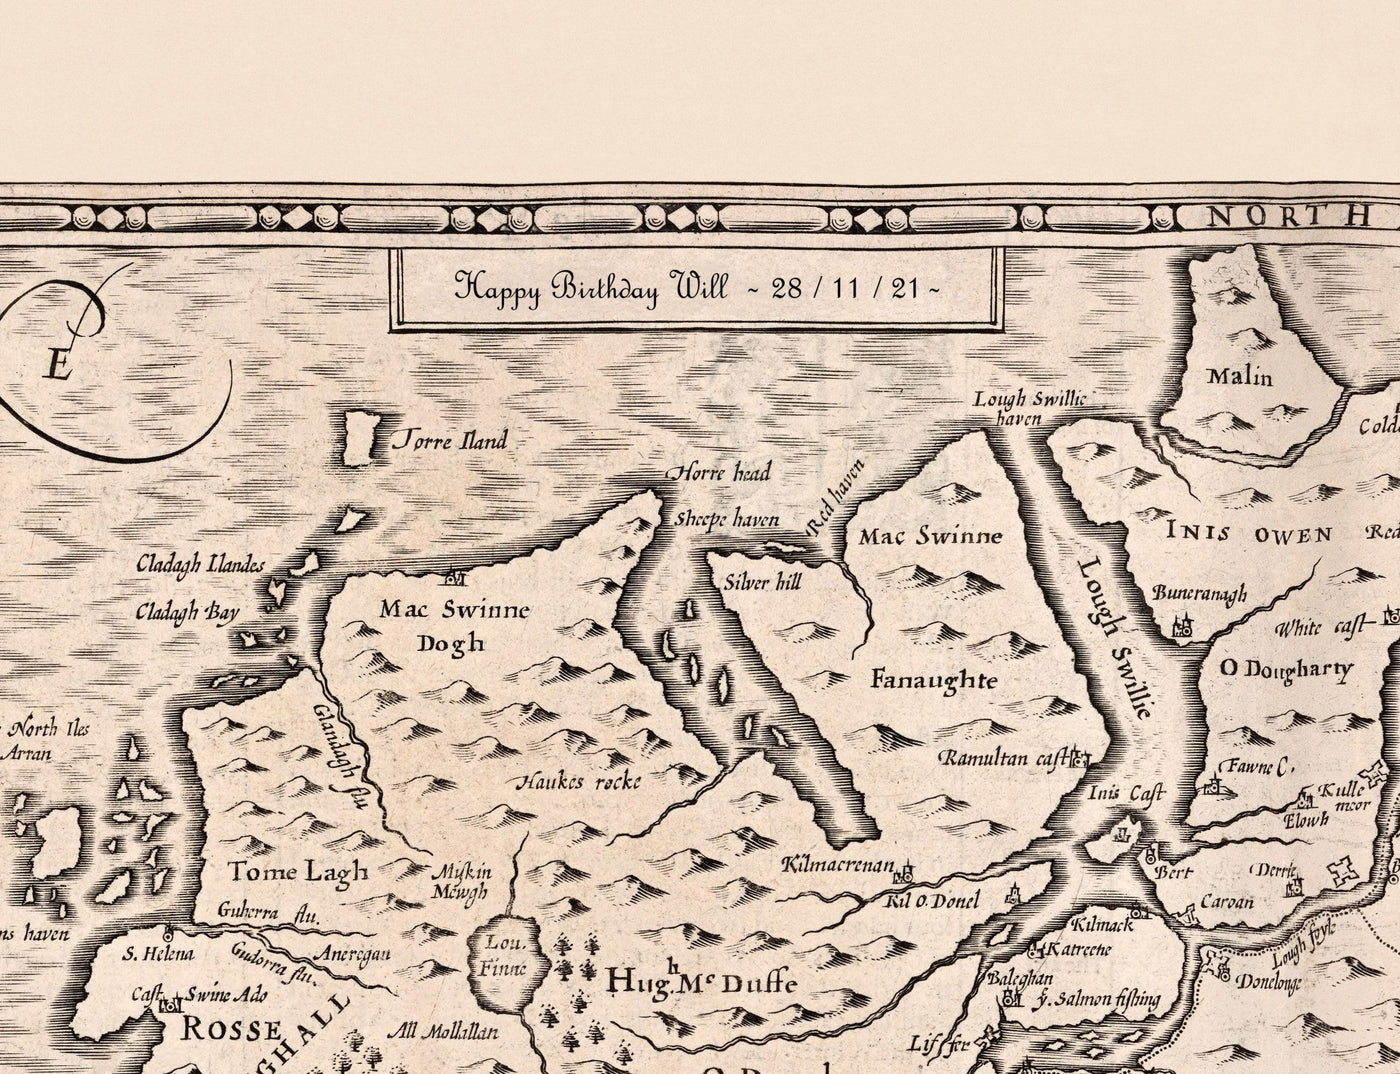 Viejo mapa de Cornwall en 1611 por Speed ​​- Penzance, St Ives, Plymouth, Tierres End, Padstow